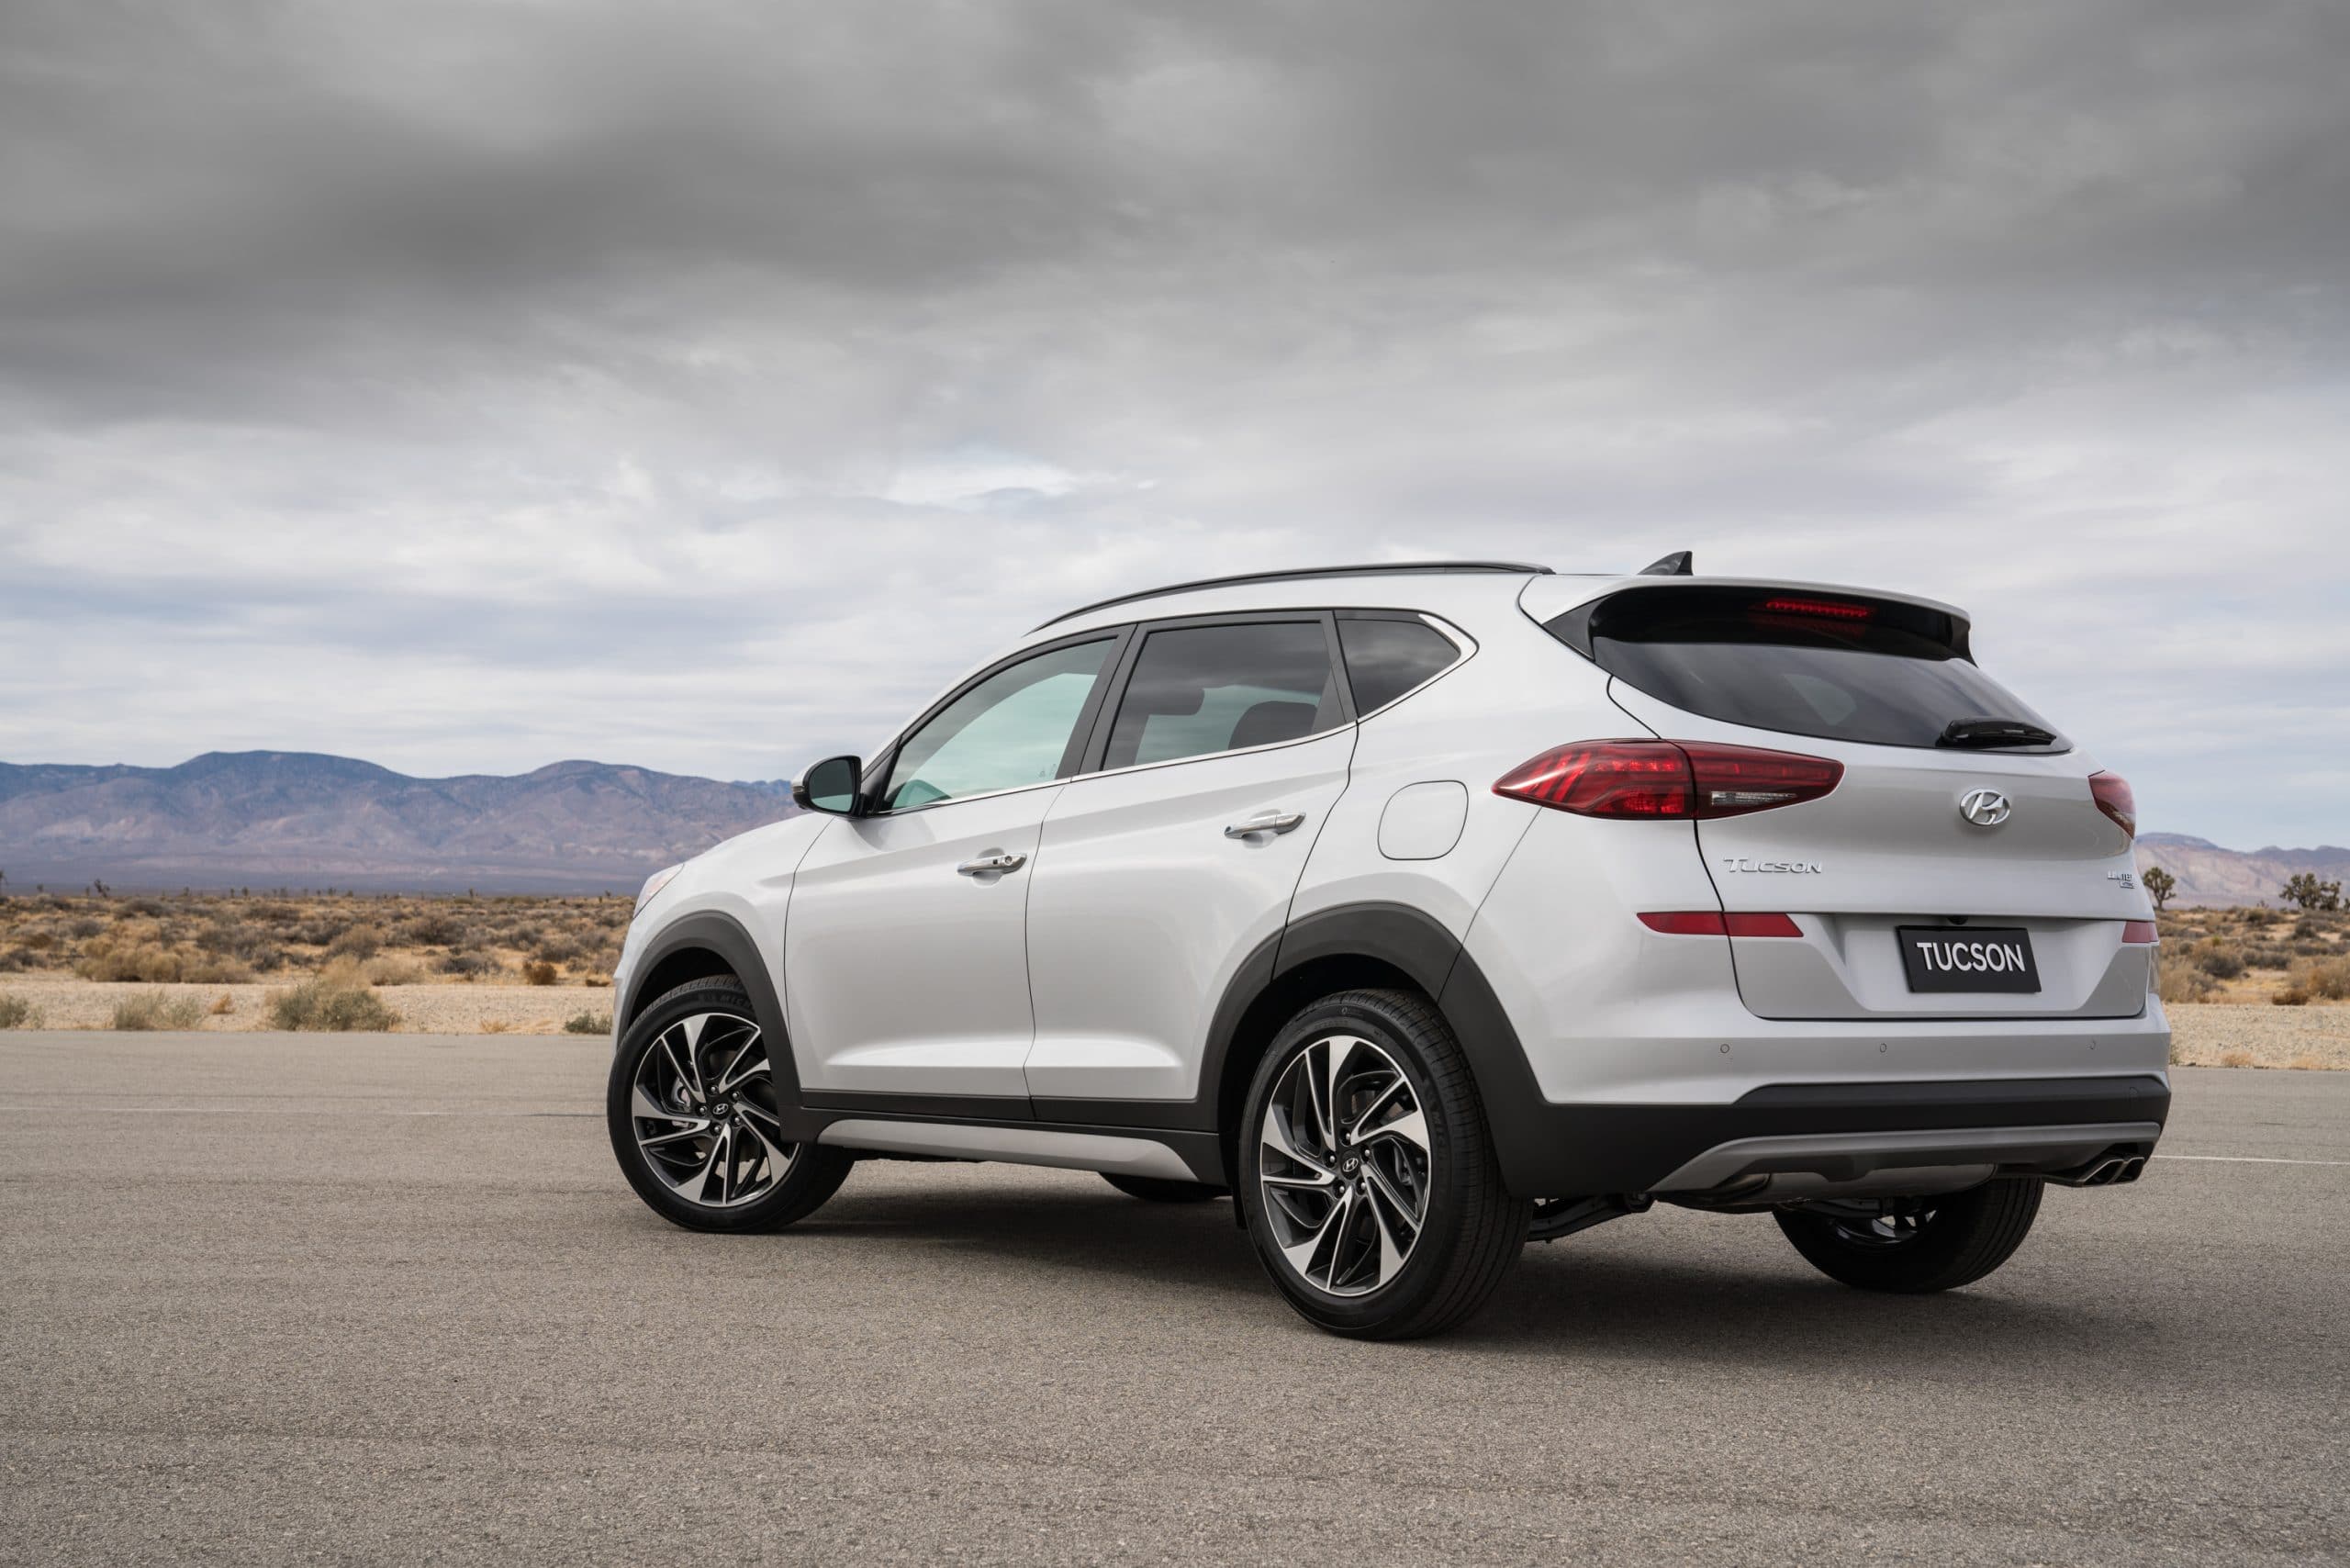 Essai routier et avis: Hyundai Tucson 2020 | Ste-Foy Hyundai